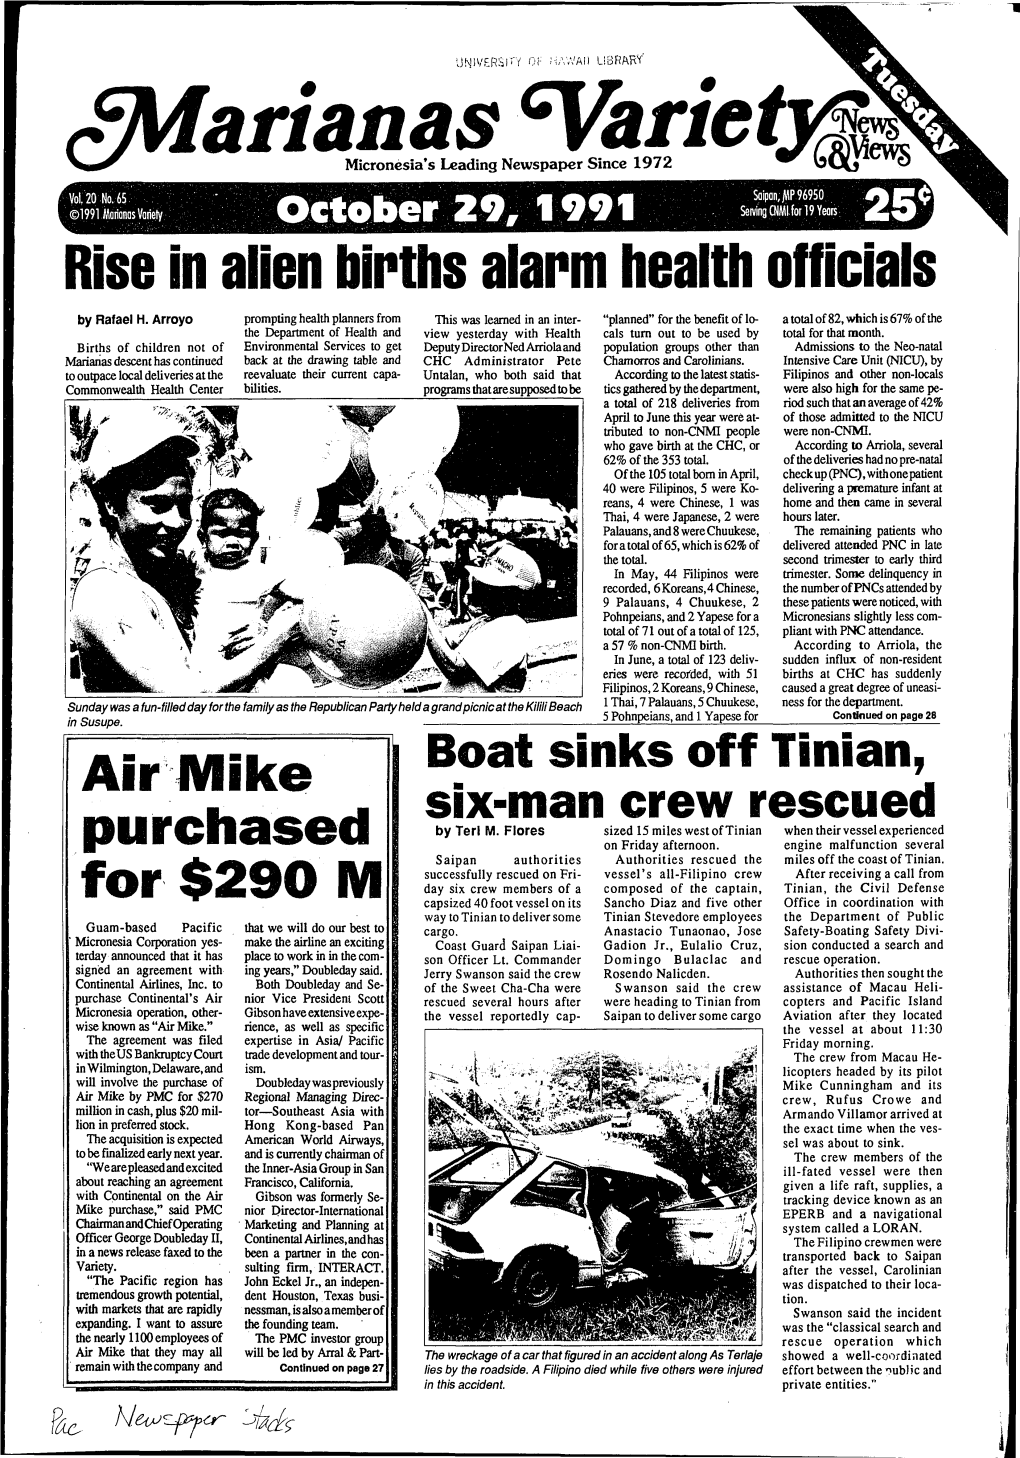 October 29, 1991 Rise in Alien Births Alarm Health Officials a Ir M